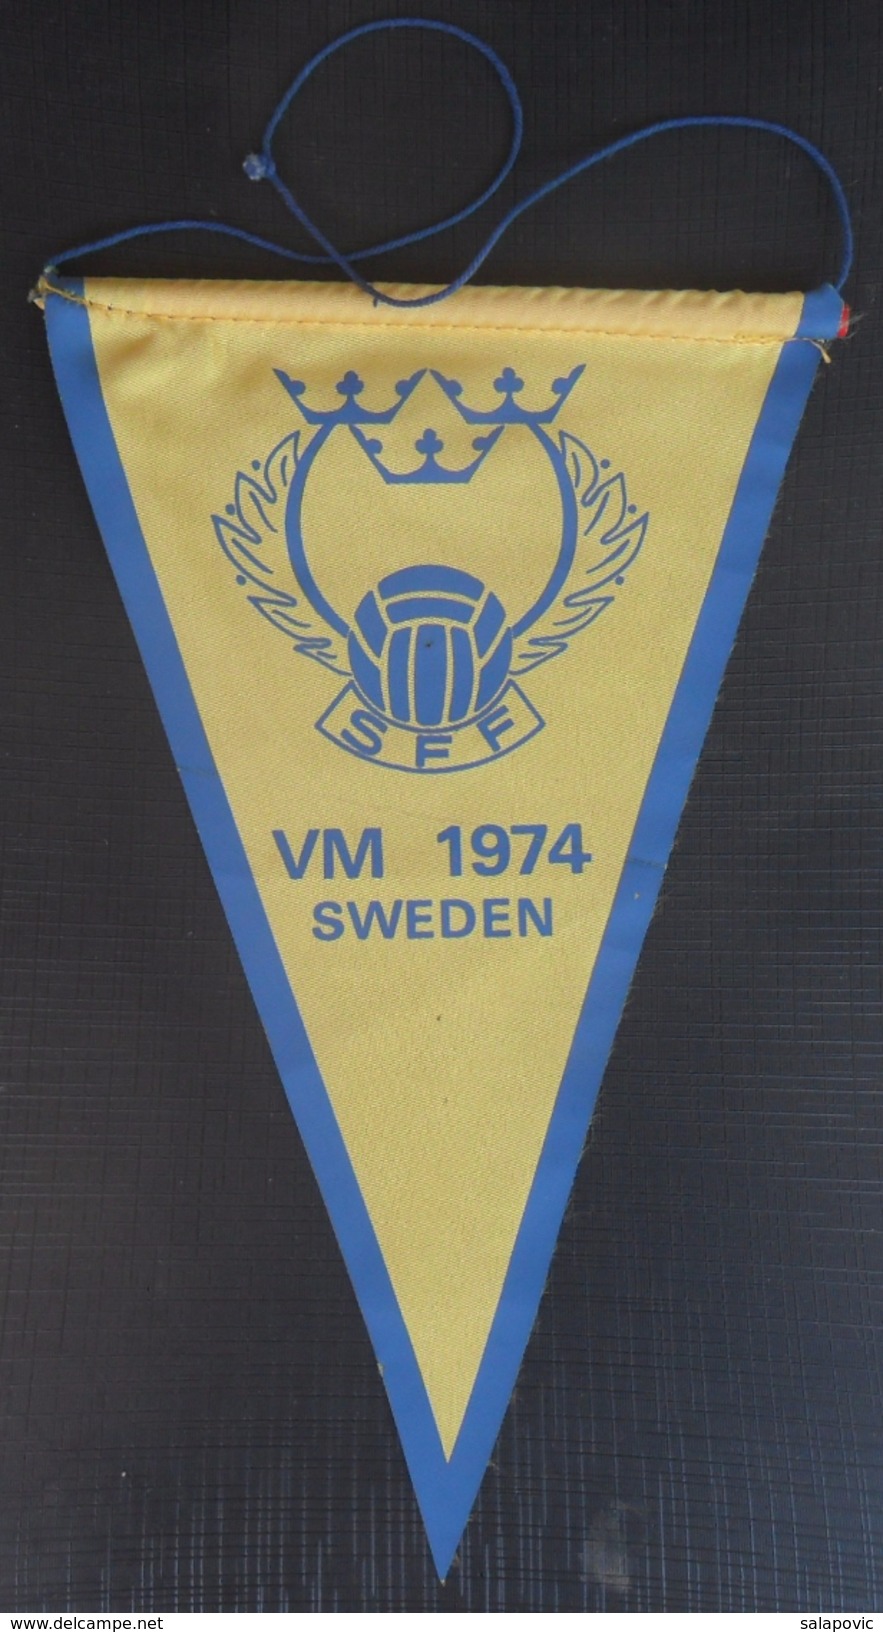 Sweden Football Federation VM 1974, World Cup Germany  FOOTBALL CLUB, SOCCER / FUTBOL / CALCIO, OLD PENNANT, SPORTS FLAG - Habillement, Souvenirs & Autres